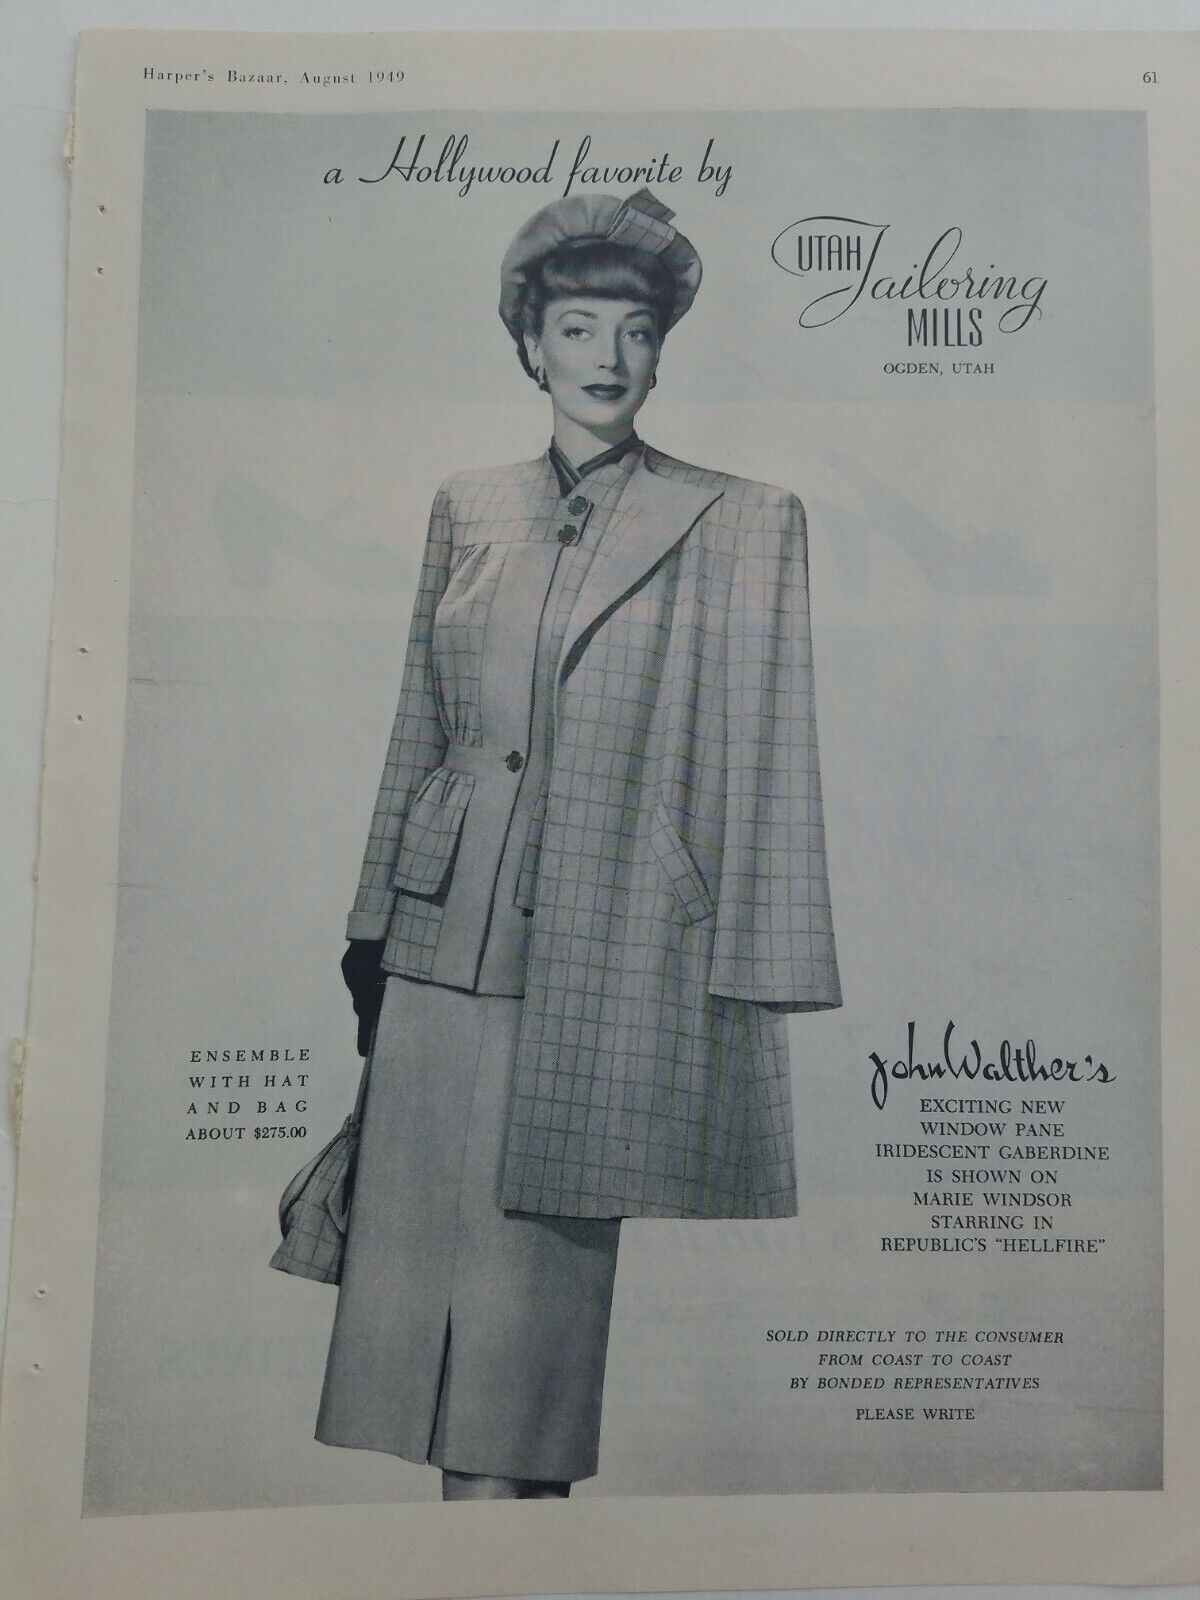 1949 Utah Tailoring Mills women's suit Marie Windsor star Republic's Hellfire ad